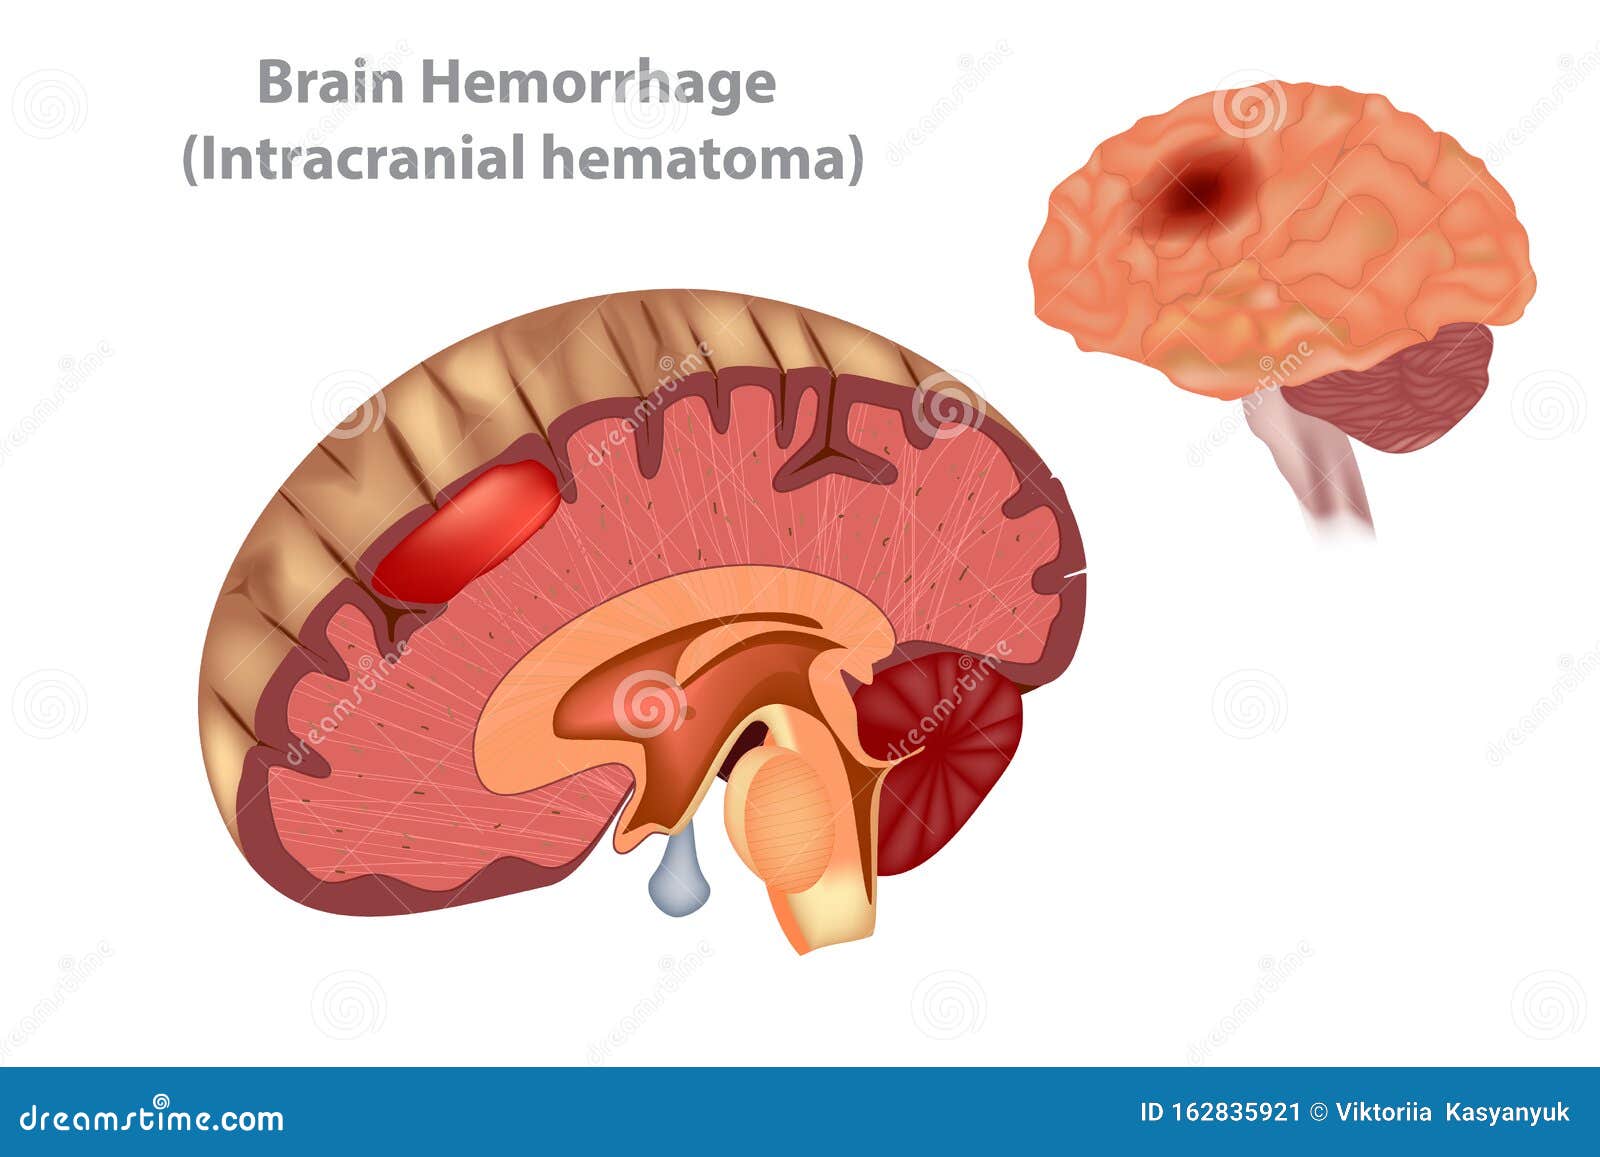 brain hemorrhage intracranial hematoma